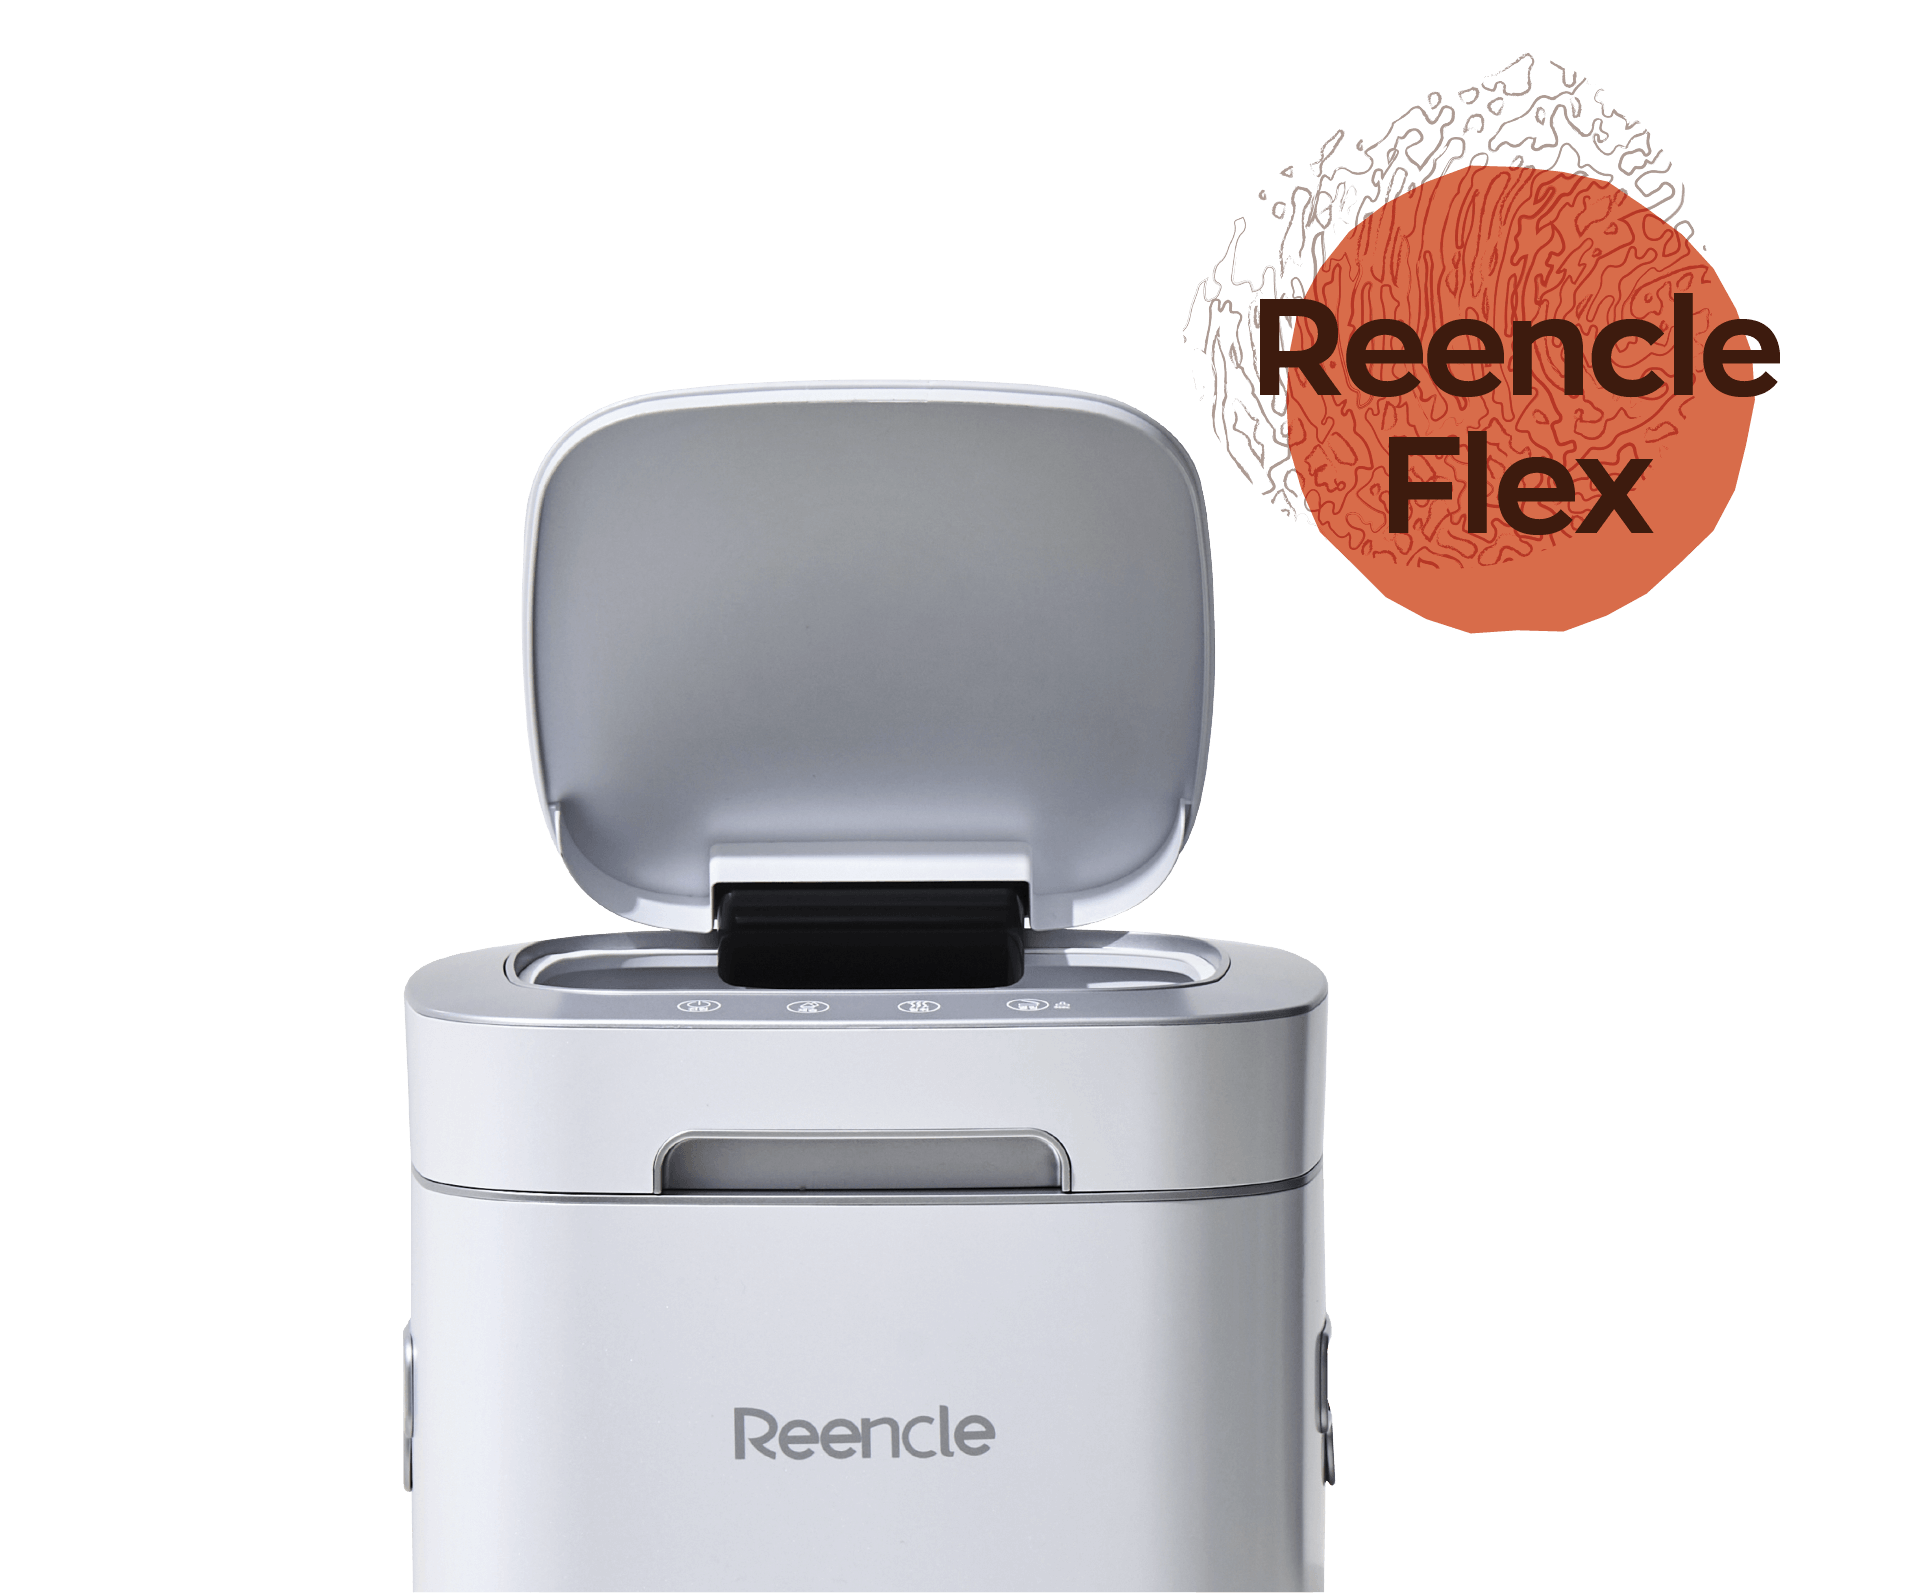 Reencle Flex - Subscription